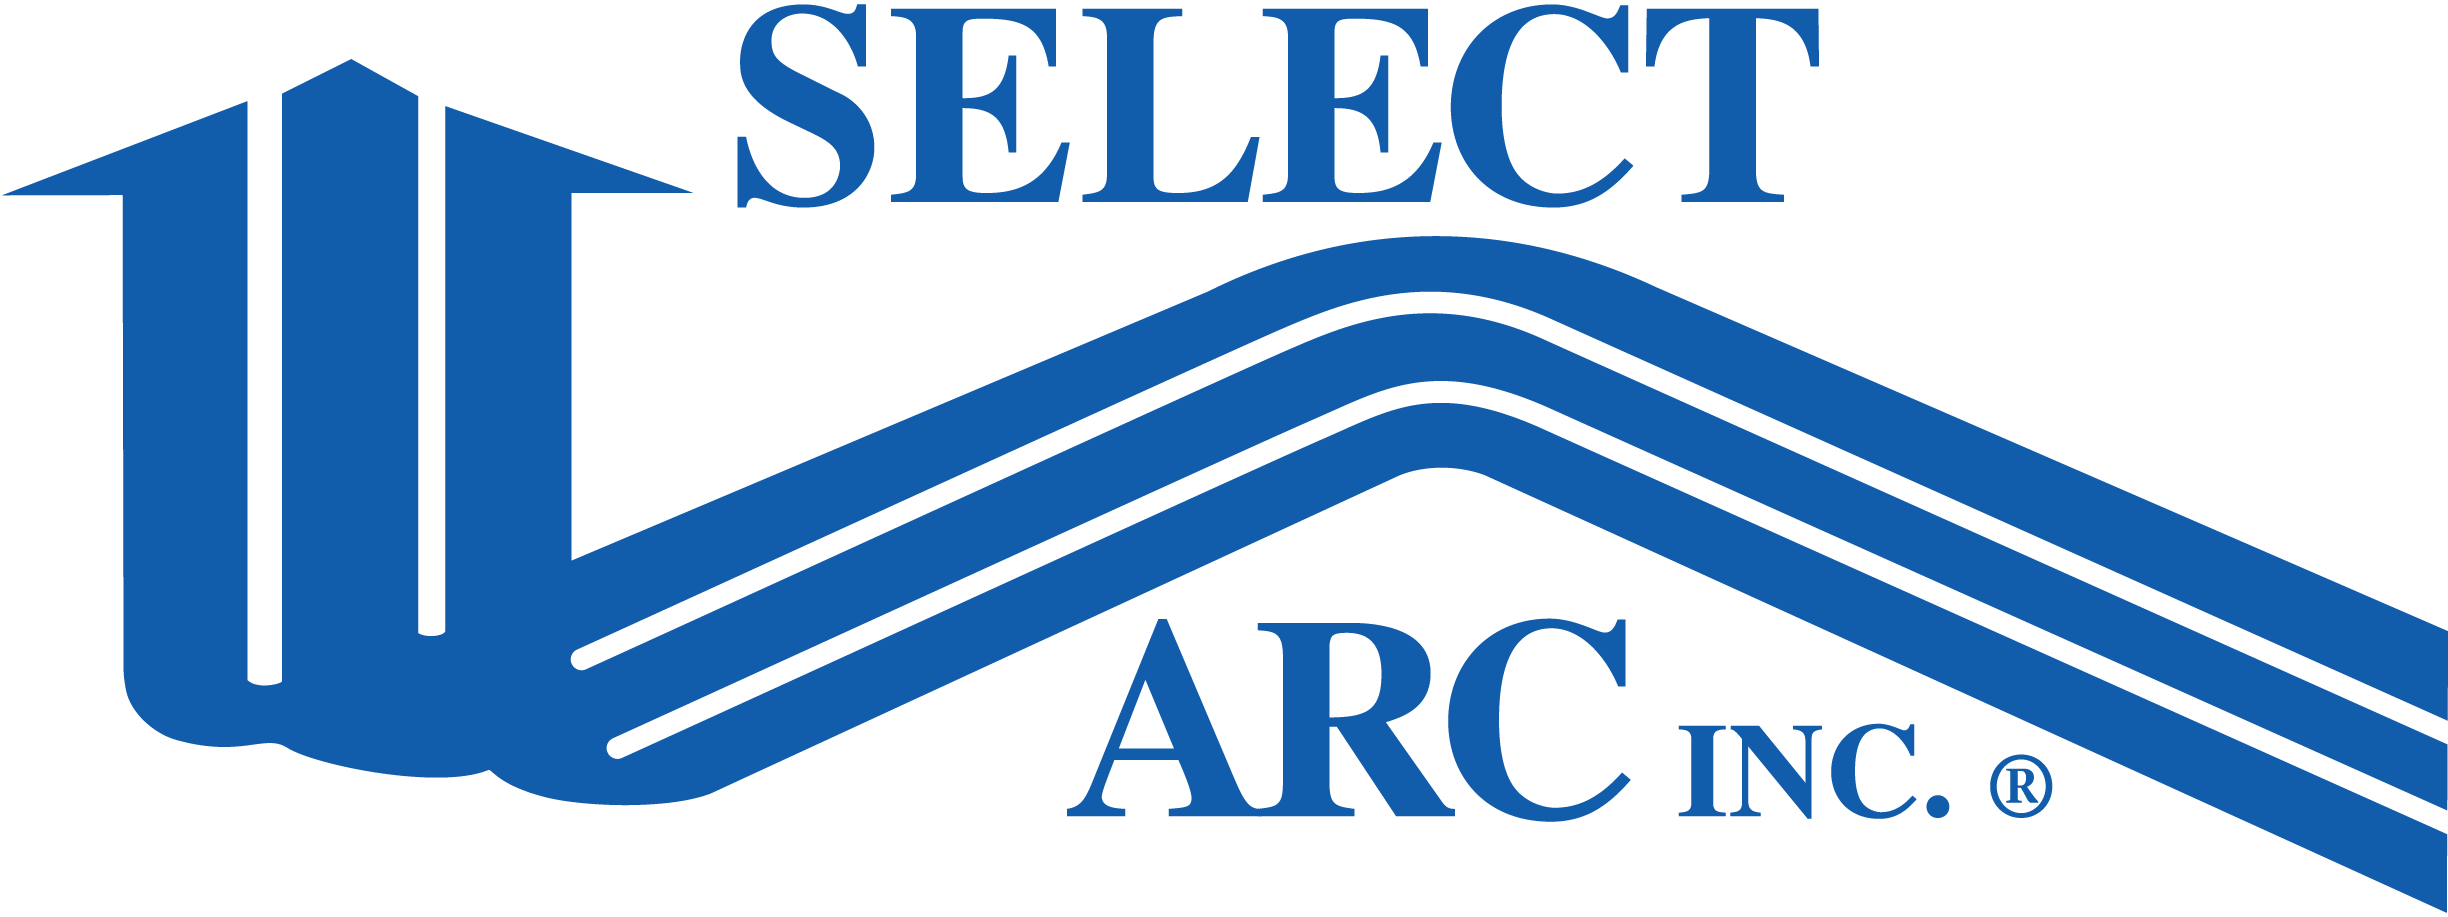 Select-Arc